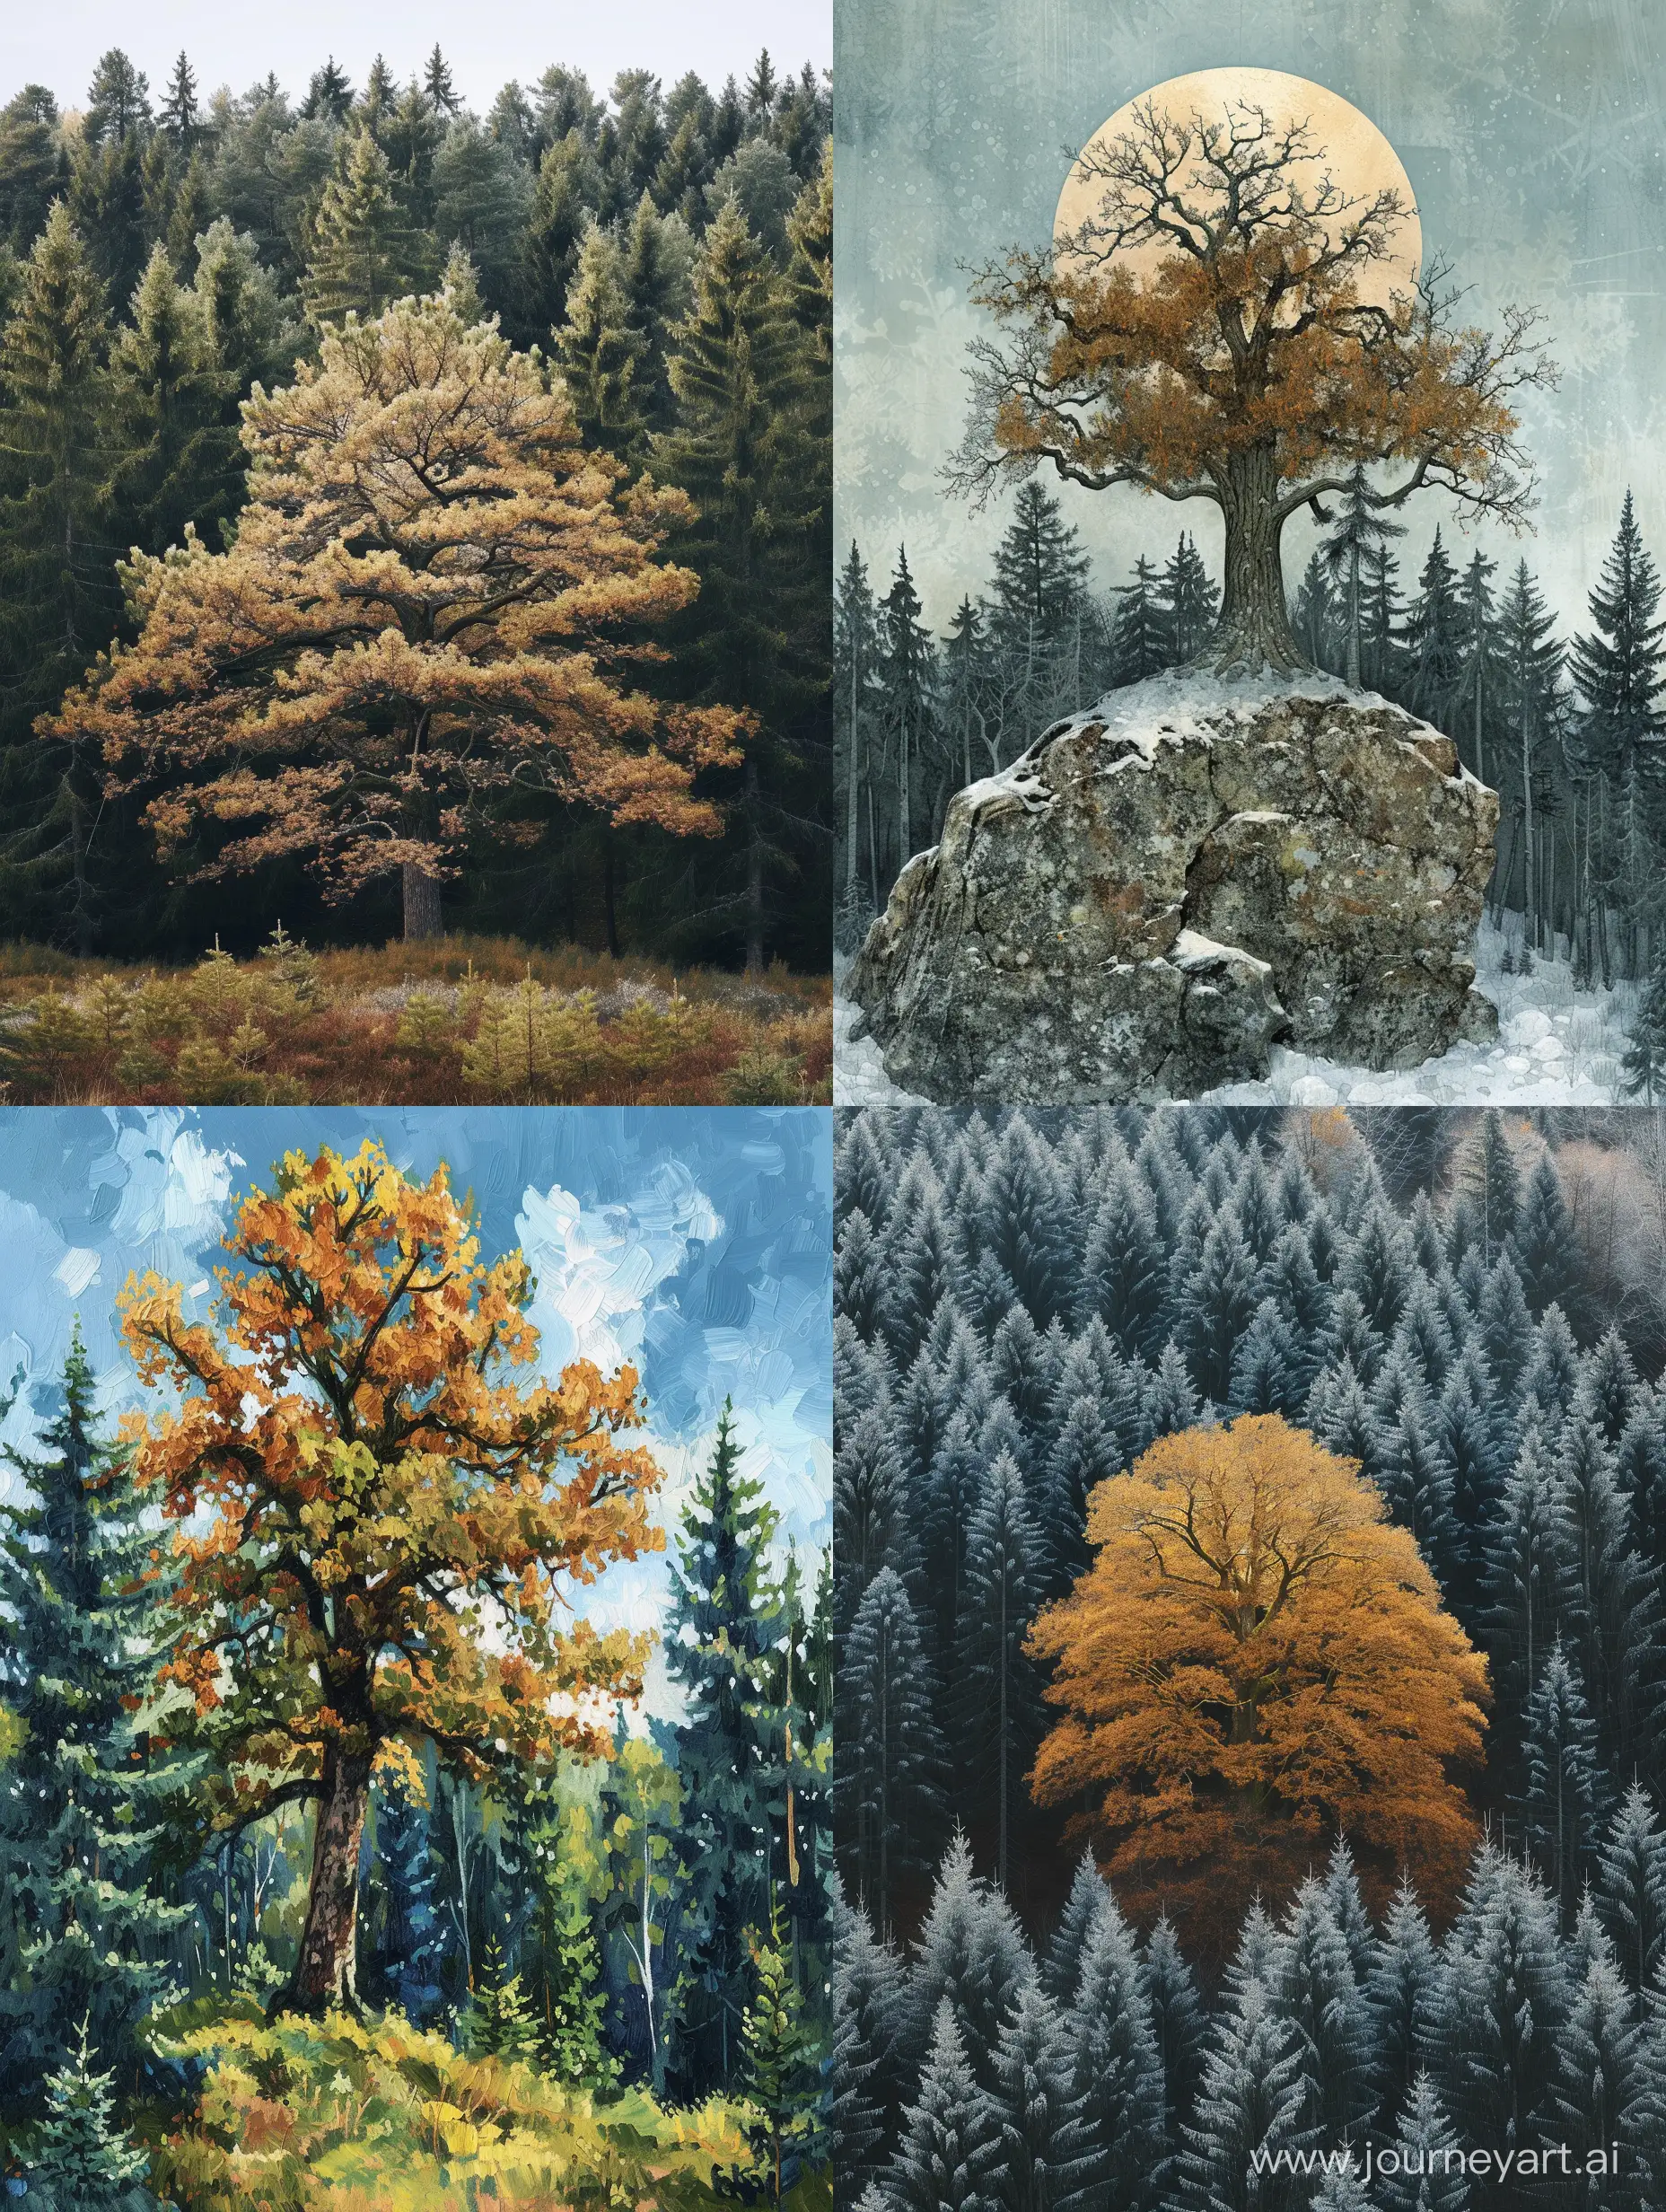 Majestic-Oak-Towering-Over-Spruce-Forest-Landscape